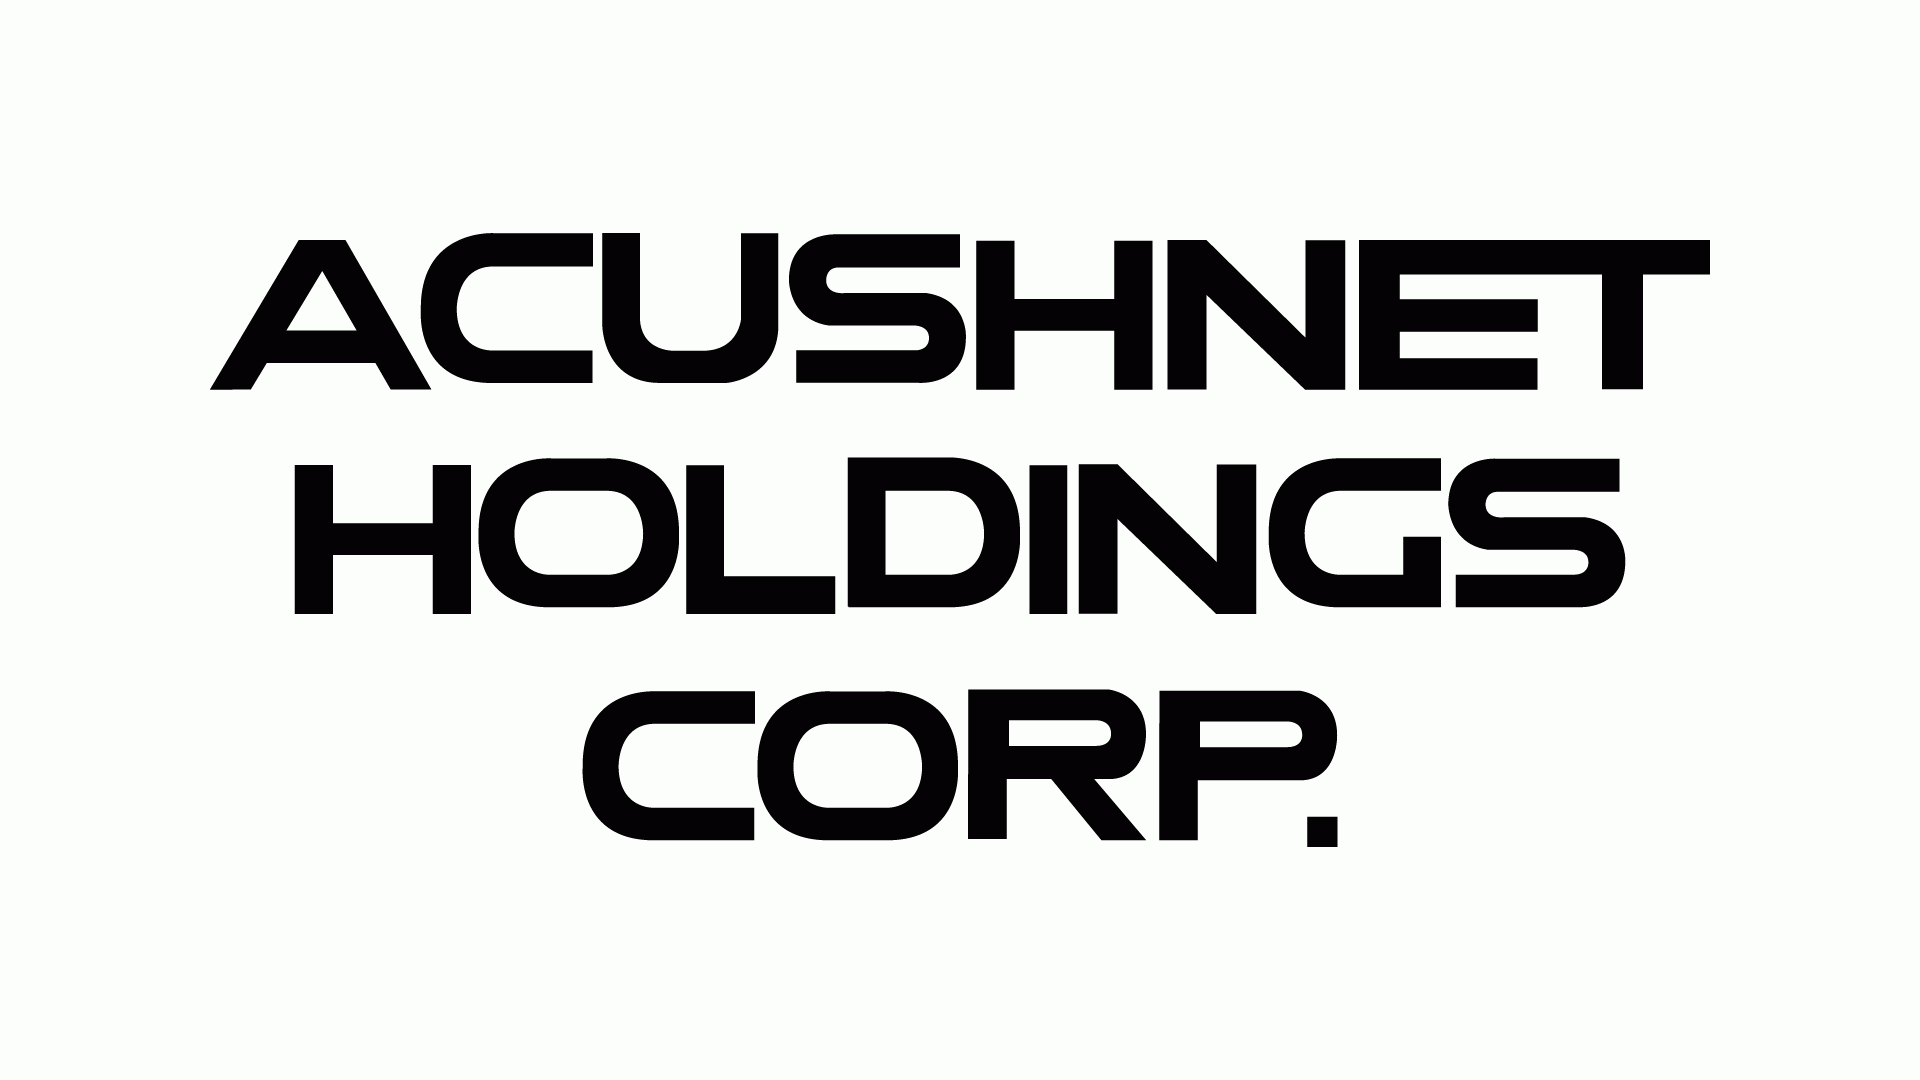 Acushnet Holdings Corp.